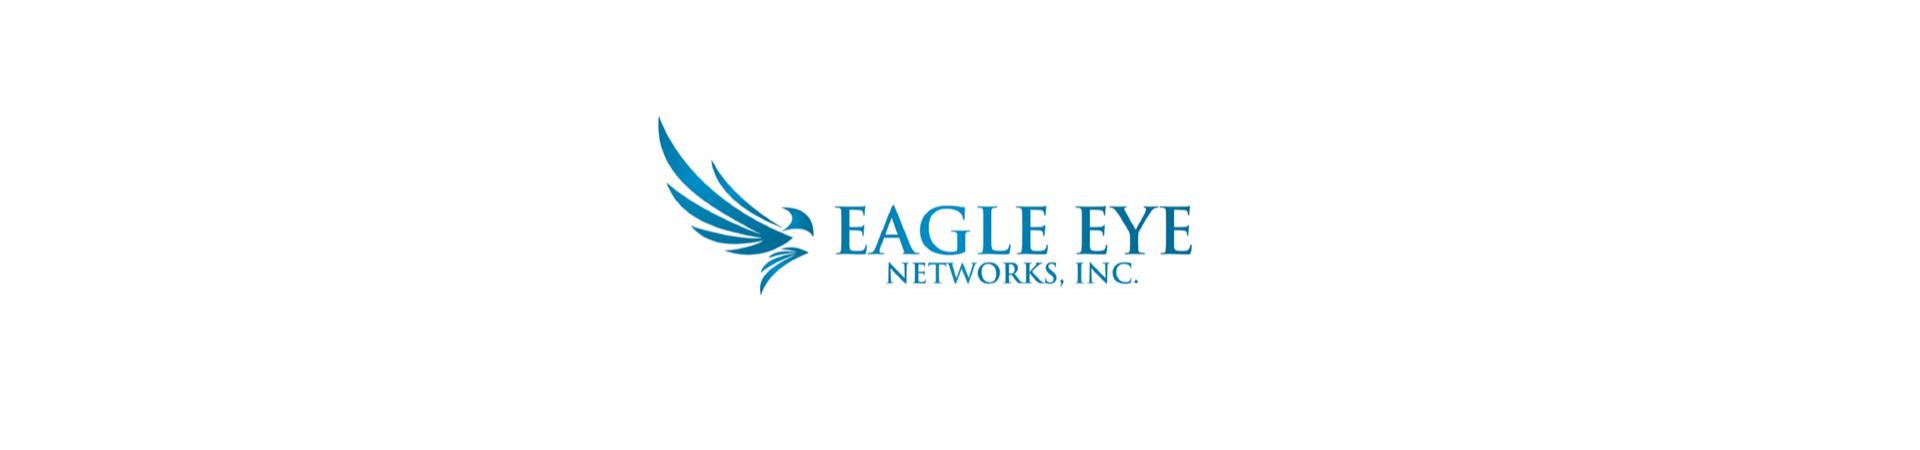 Alert benoemd tot officiële reseller Eagle Eye 